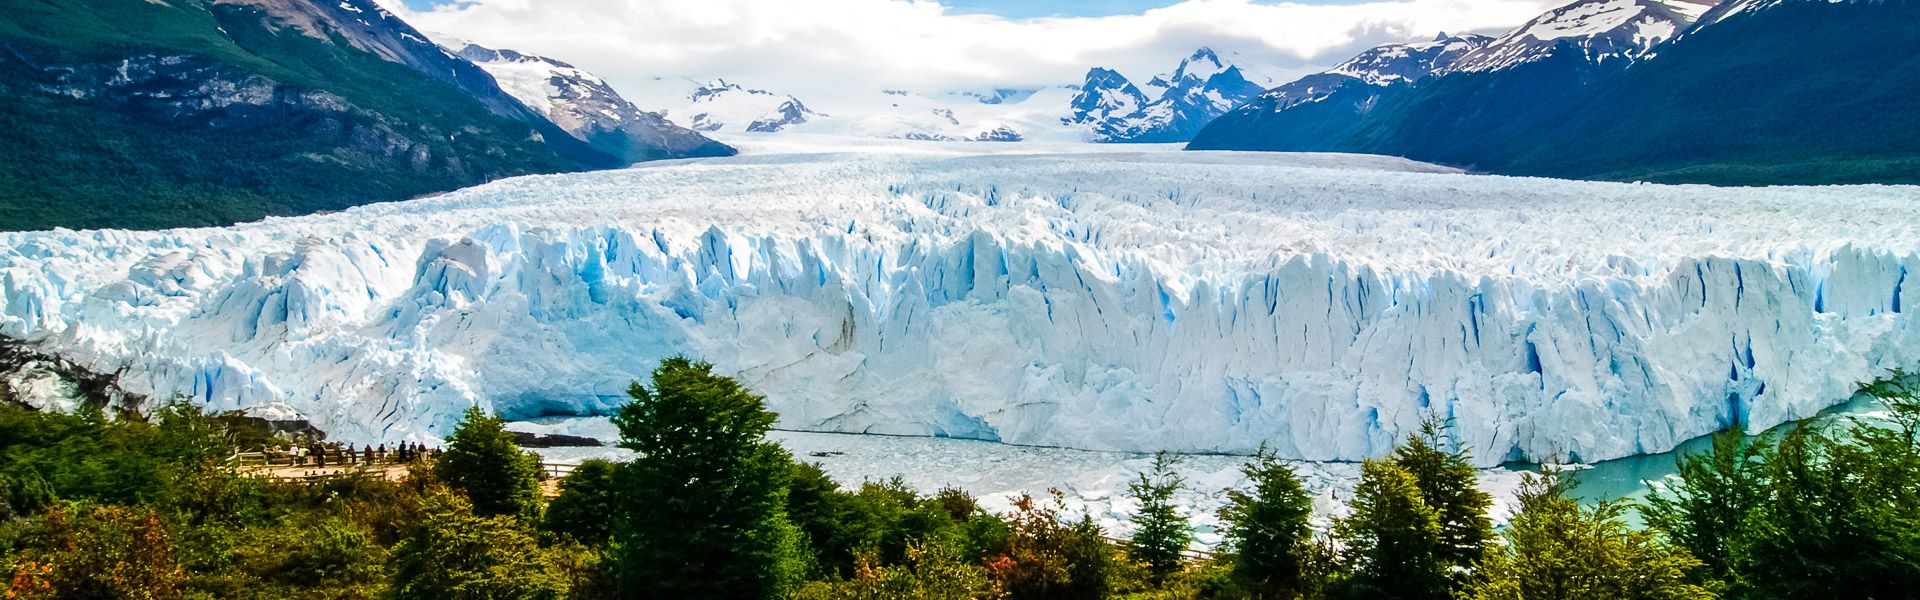 Perito Moreno Gletscher |  Kai-Uwe Kchler, Art & Adventure / Chamleon